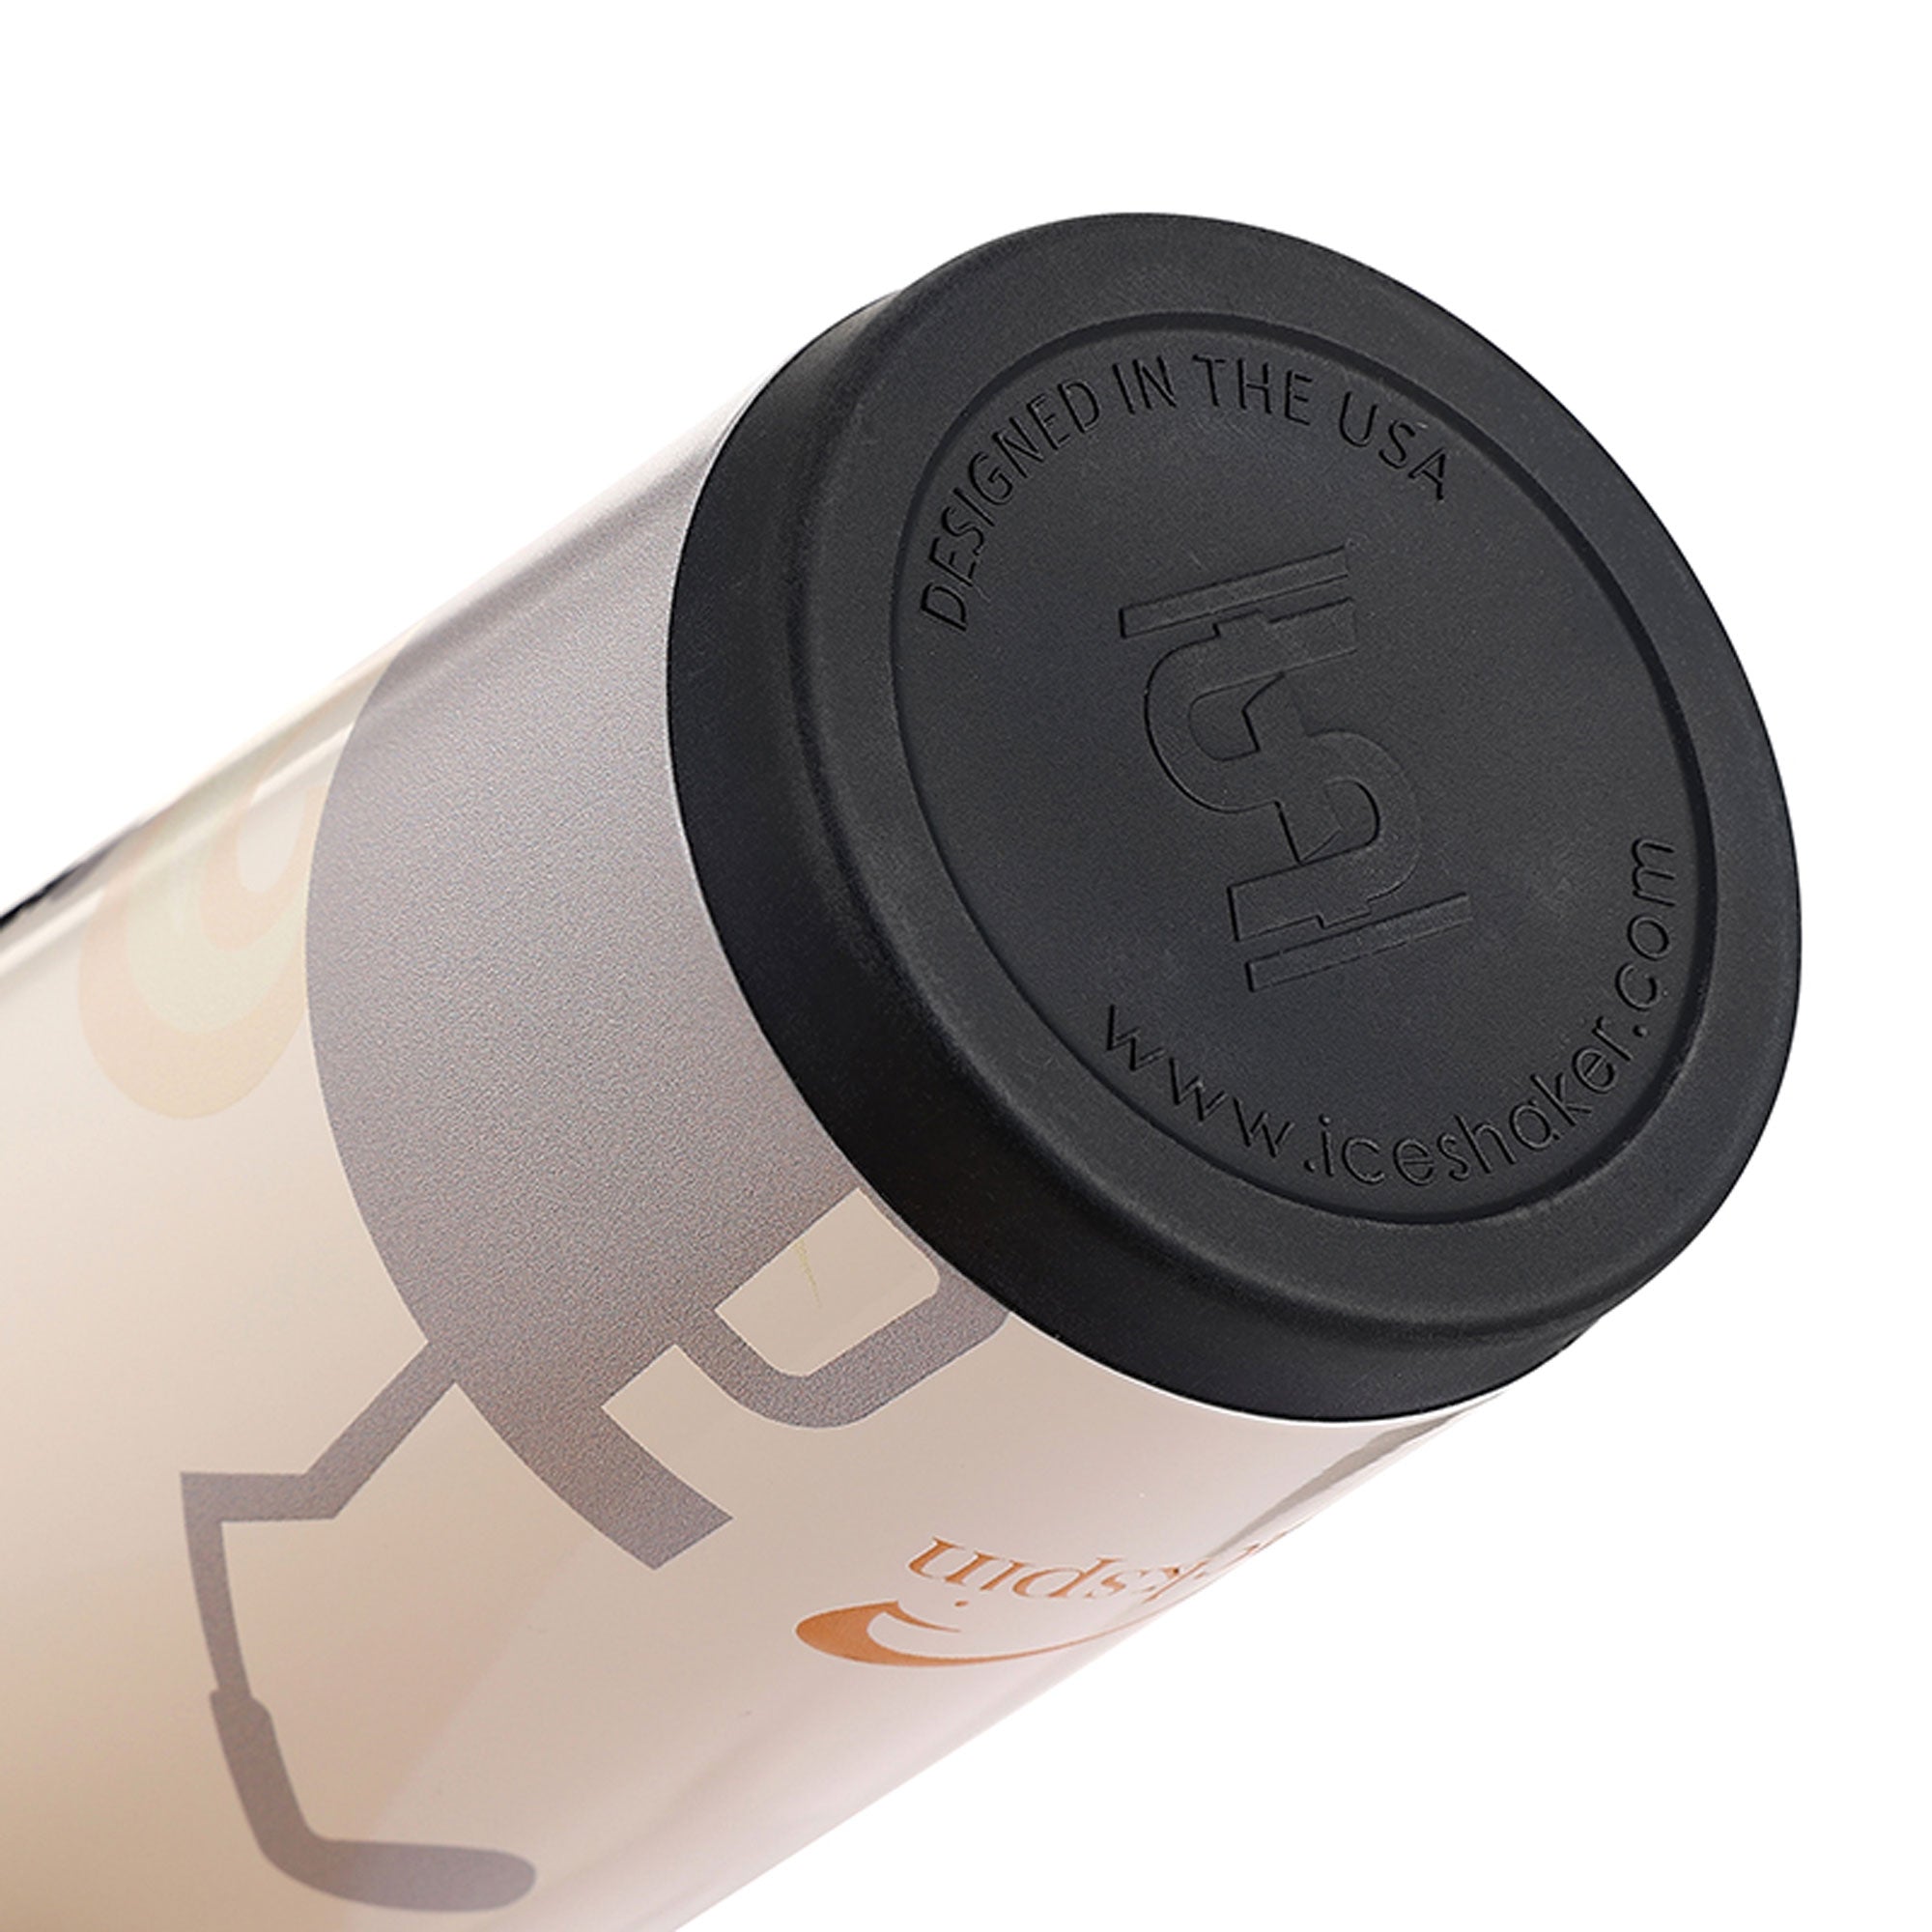 Ice Shaker - Premium Insulated FlingGolf Drinkware - FlingGolf®